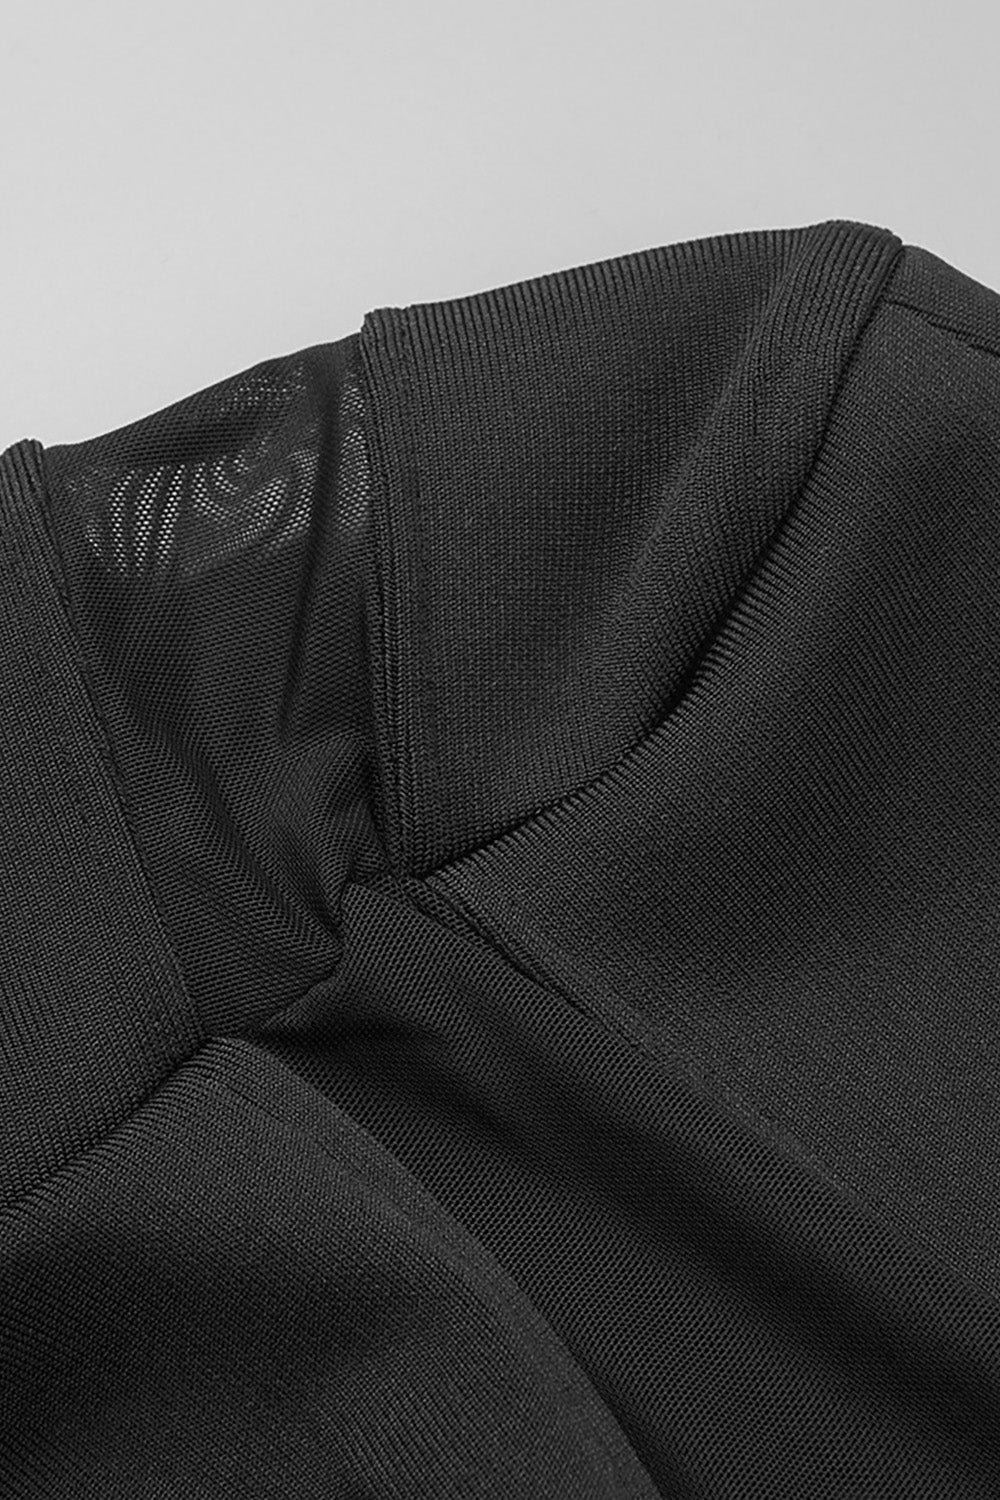 Semi-sheer Mesh Bandage Mini Dress in Black